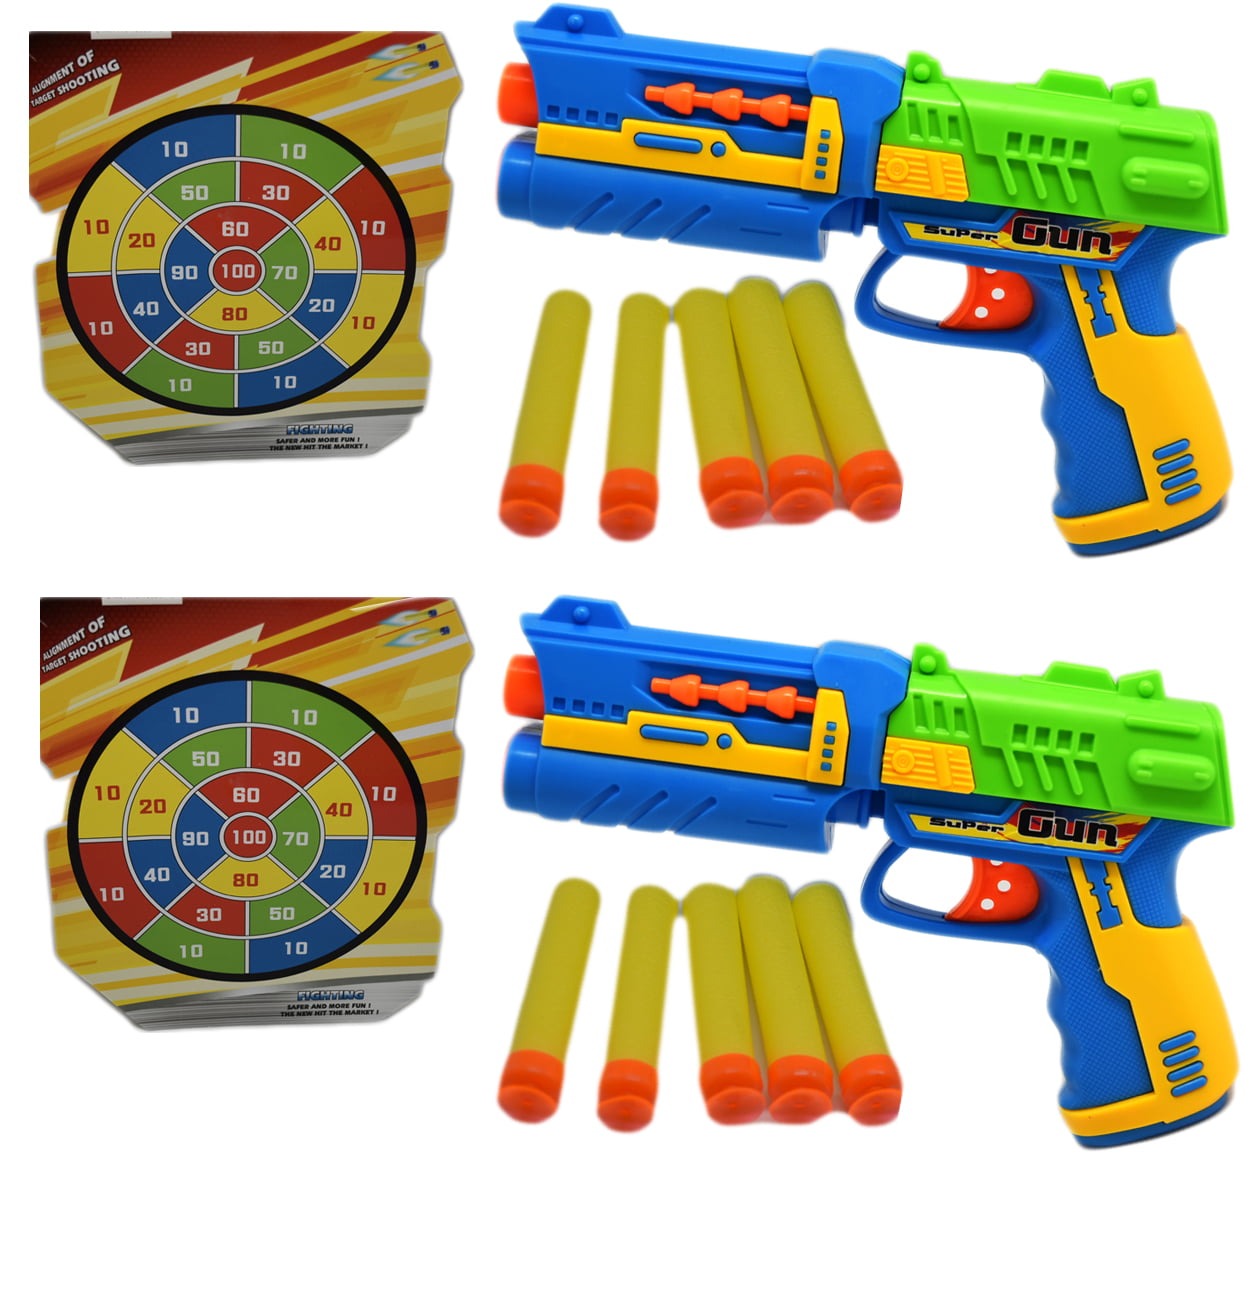 2X Soft Dart Toy Gun Shooter Air Blaster With 10 X Darts Aiming Target